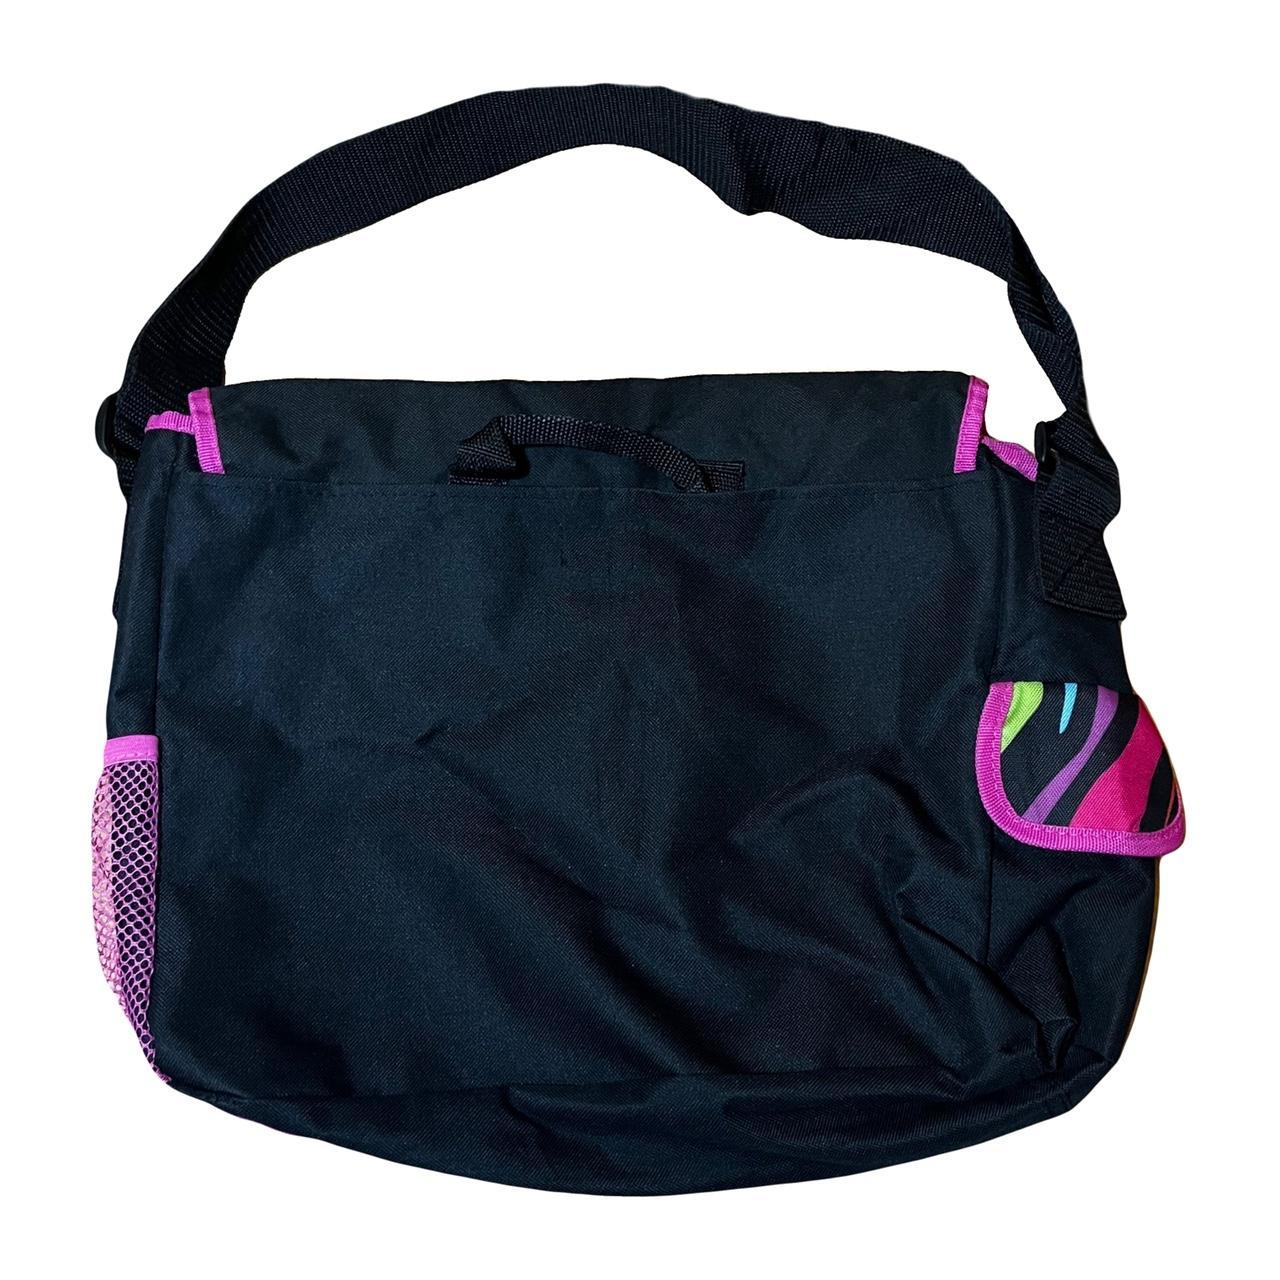 2000s HELLO KITTY Messenger Bag, Backpack, Book-bag, - Depop